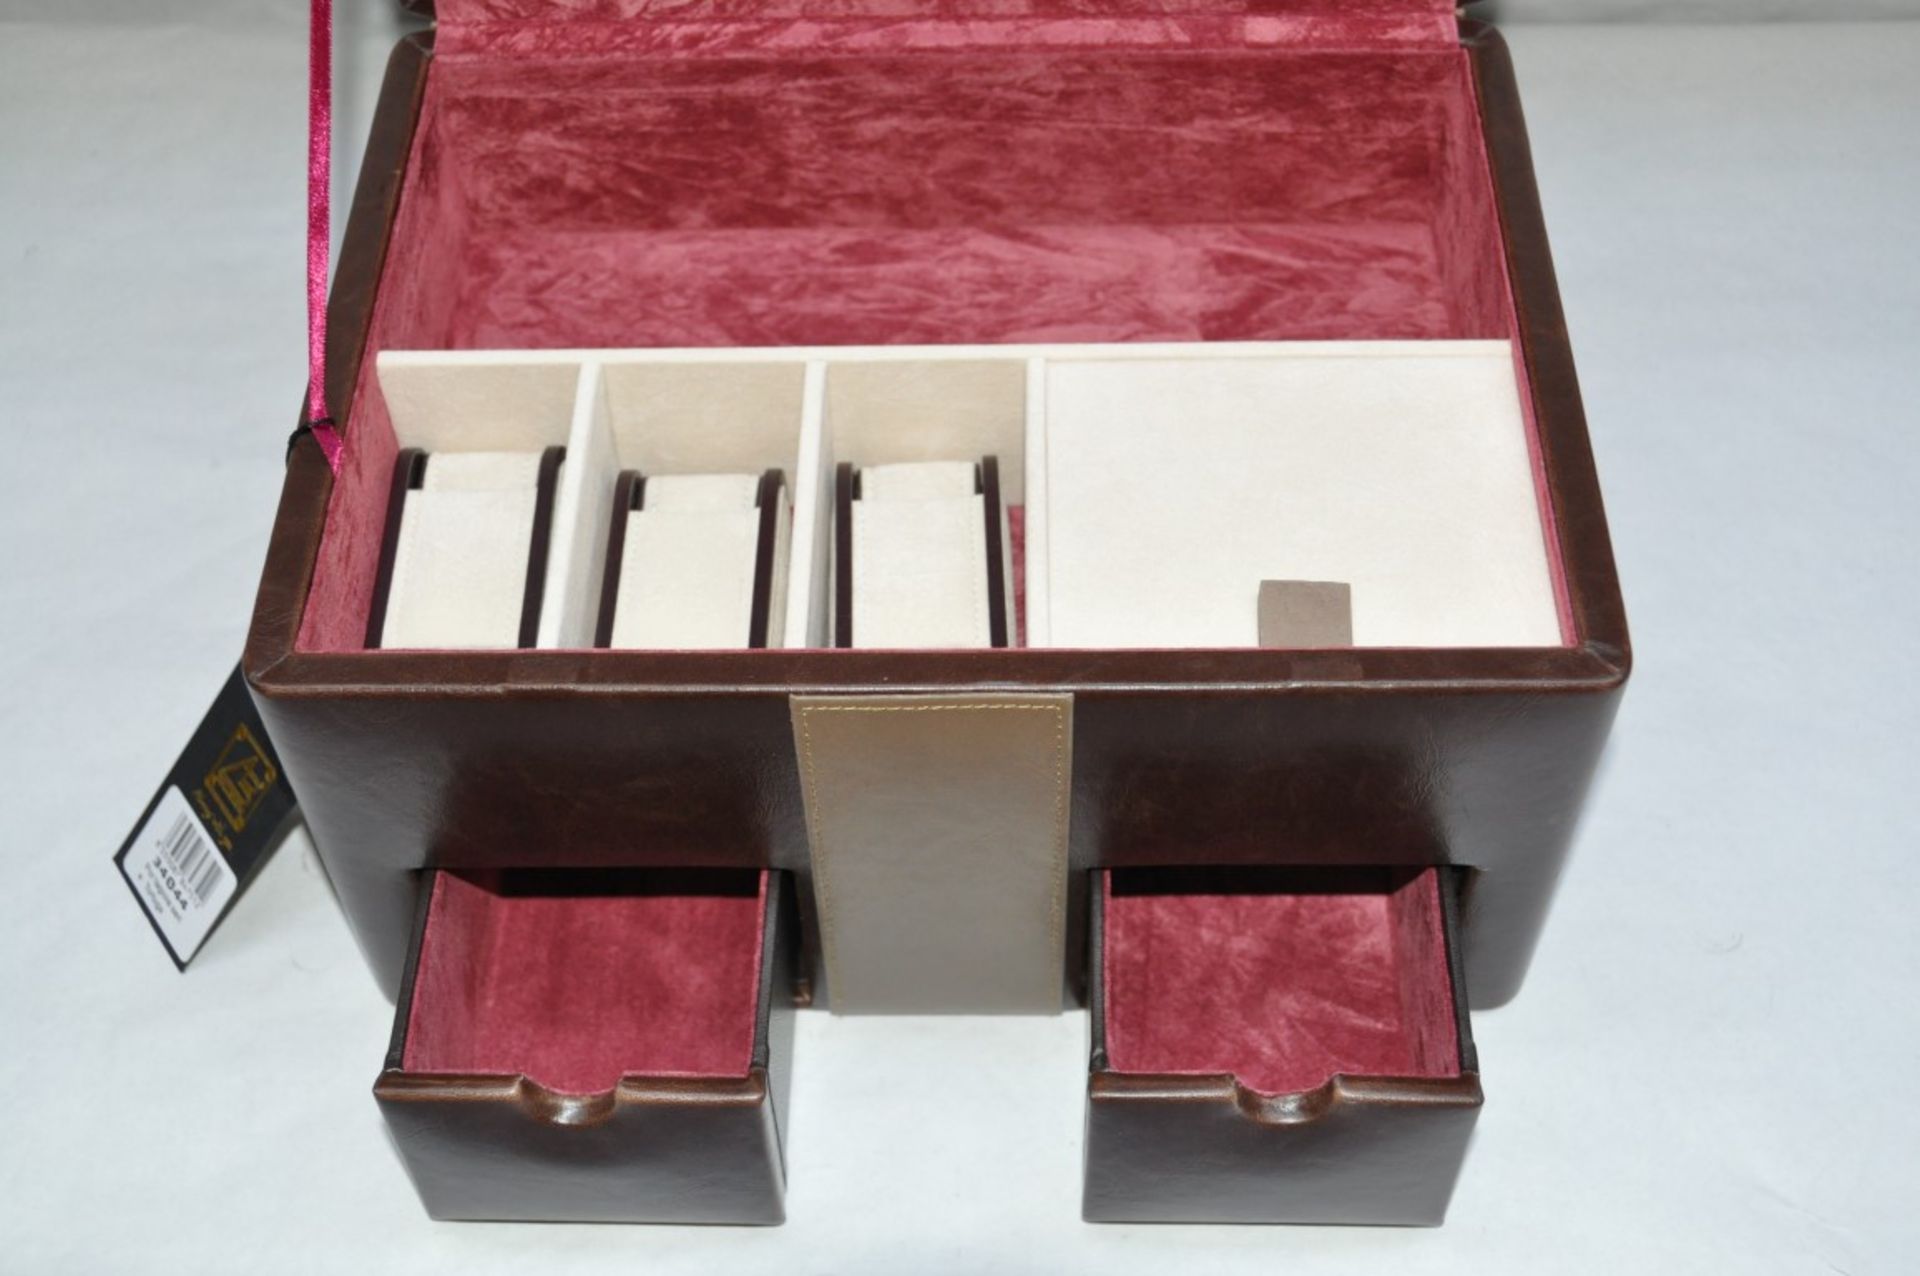 1 x "AB Collezioni" Italian Genuine Leather & Suede Luxury Jewellery Box (34044) - Ref LT000 - - Image 3 of 9